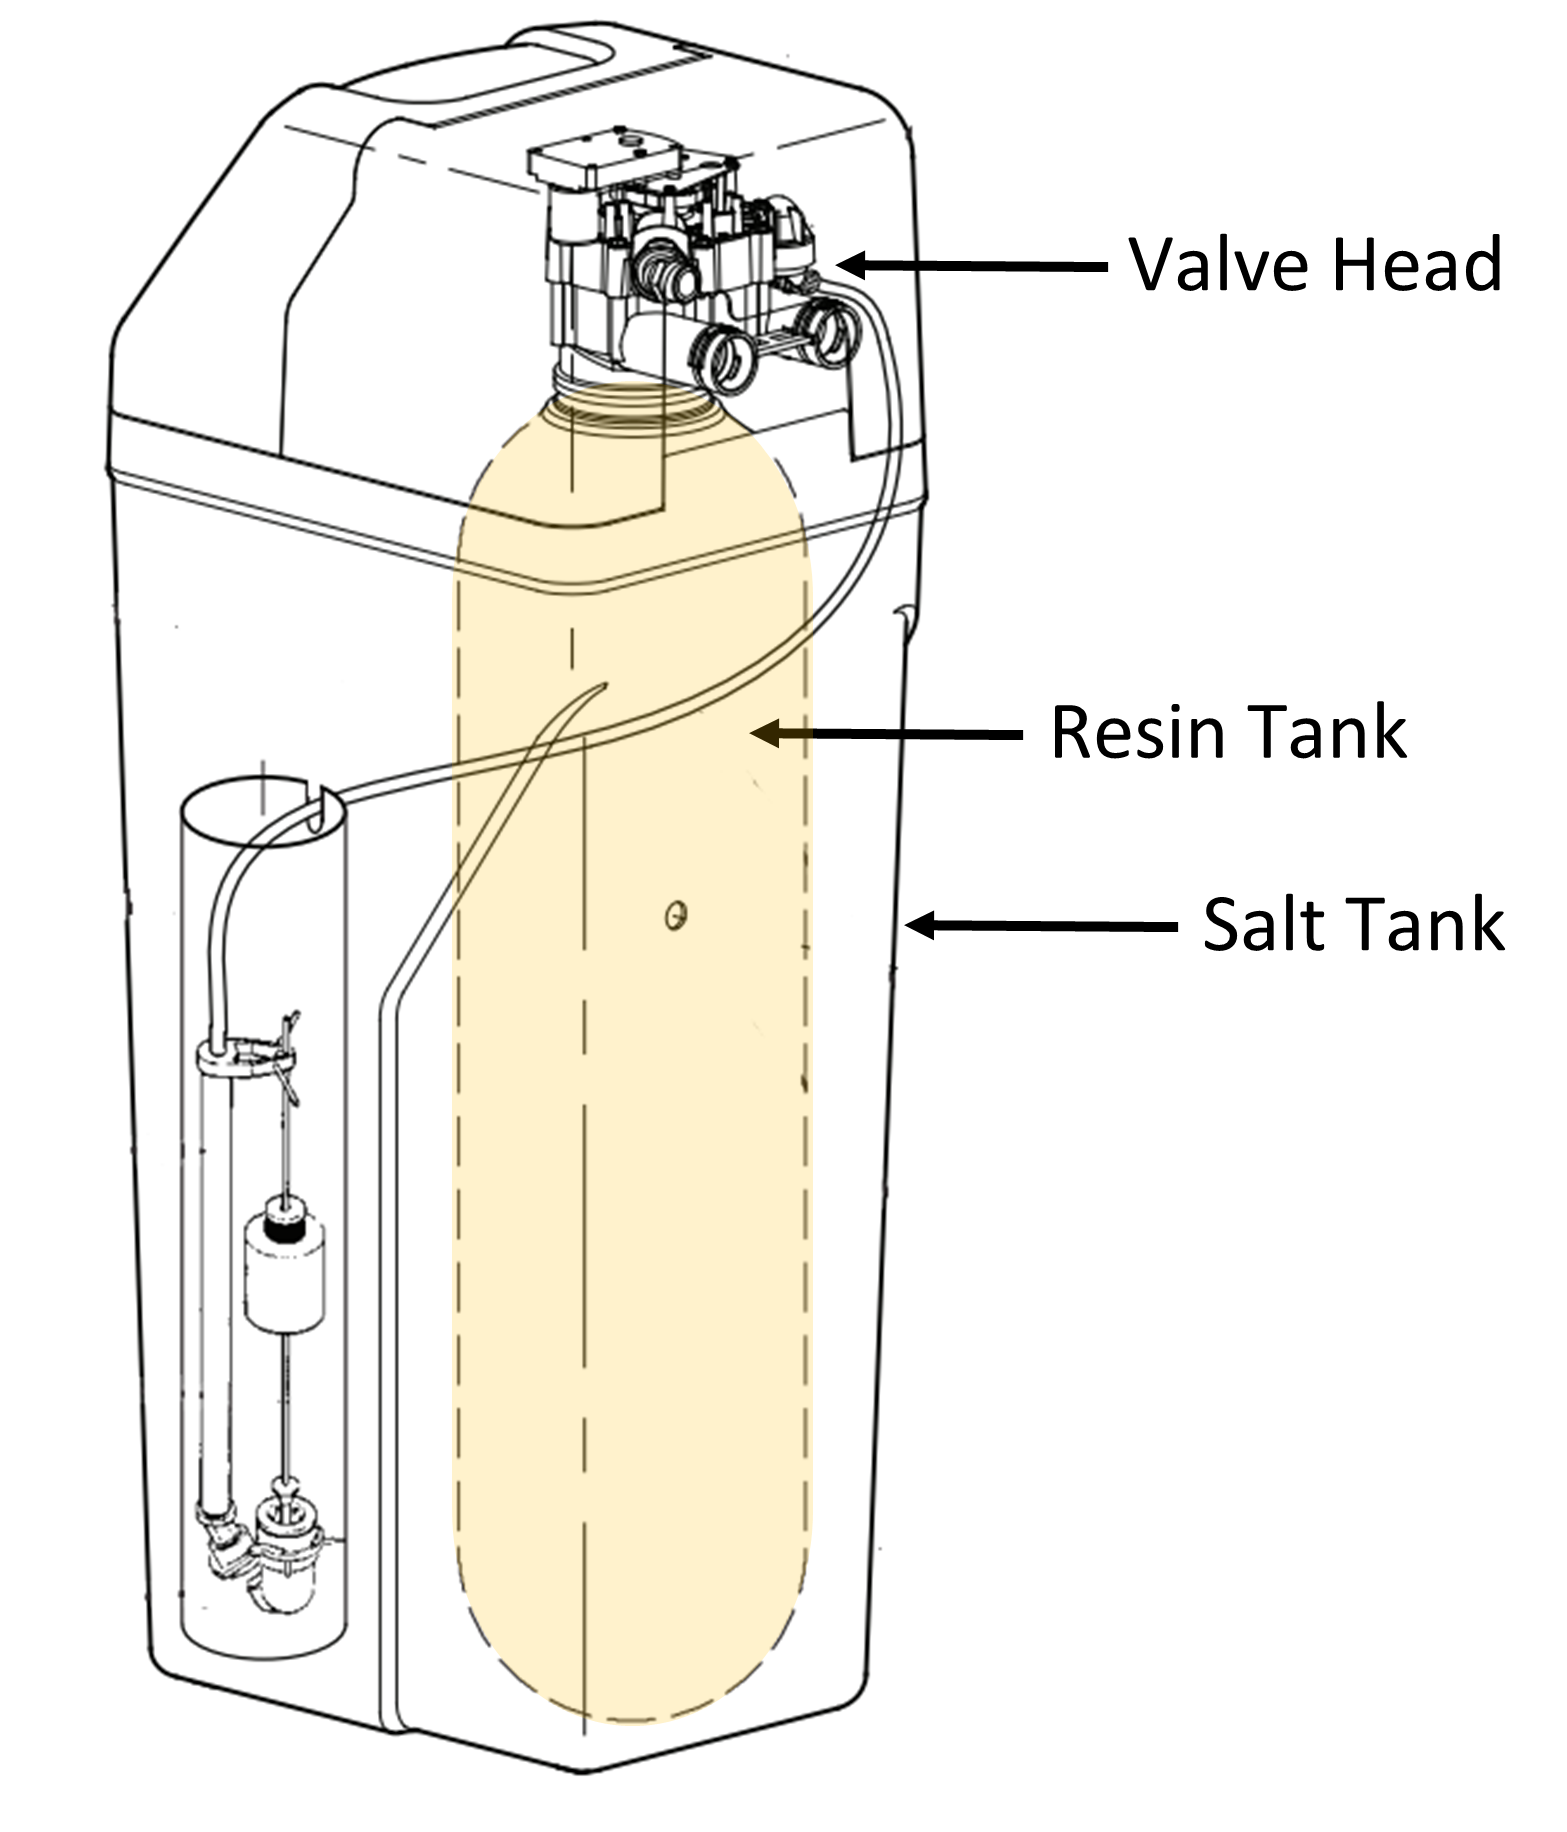 How To Clean A Rheem Water Softener How Does a Water Softener Work? – Rheem